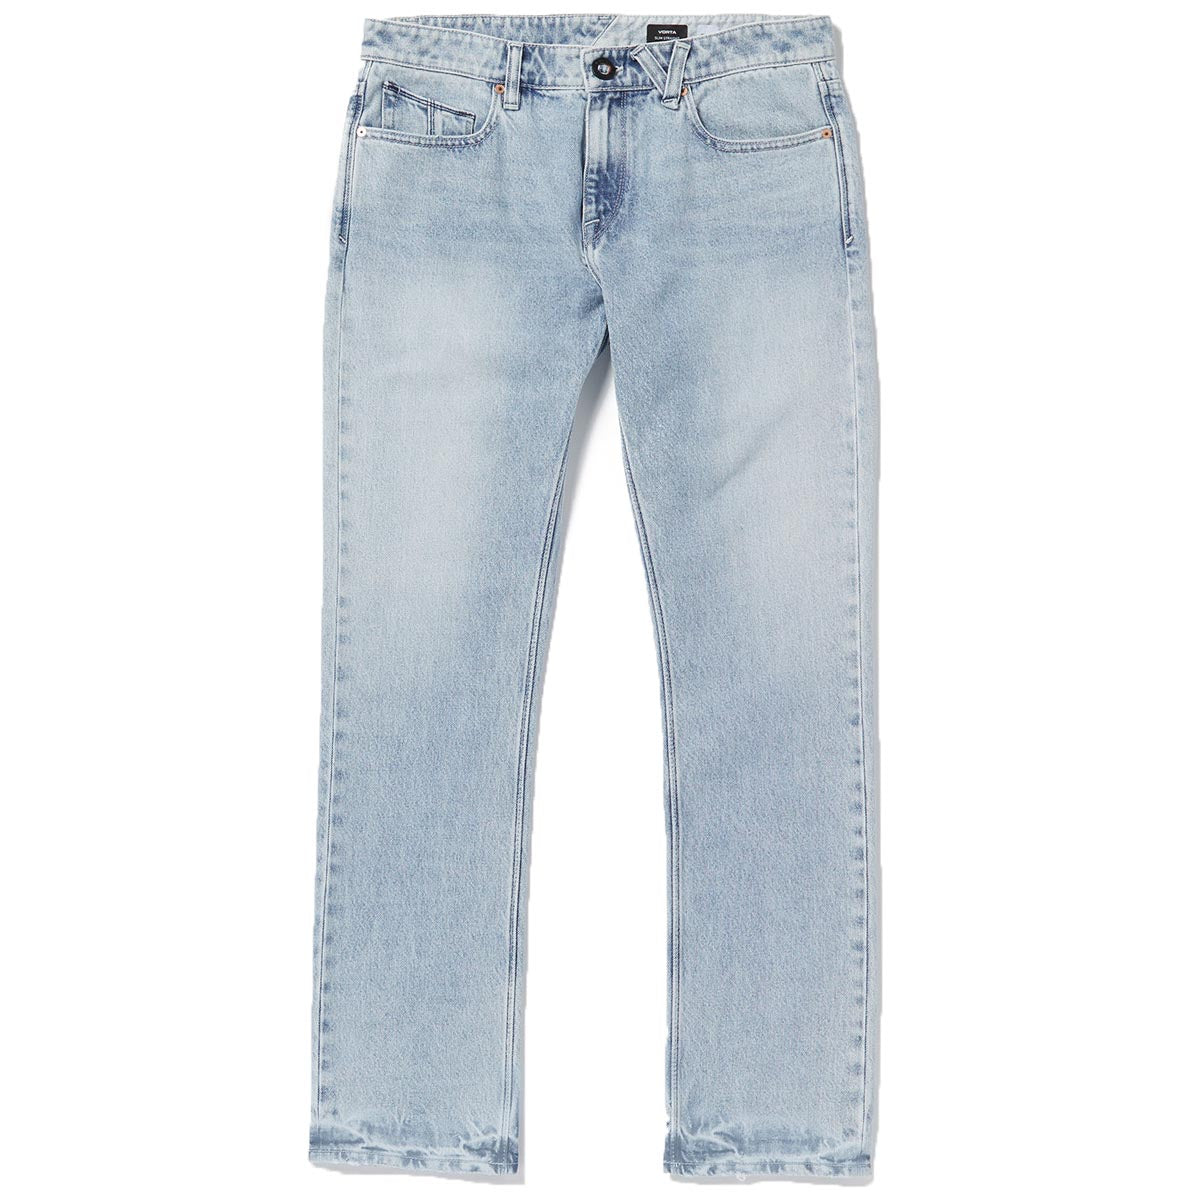 Volcom Vorta Denim Jeans - Sandy Indigo image 1